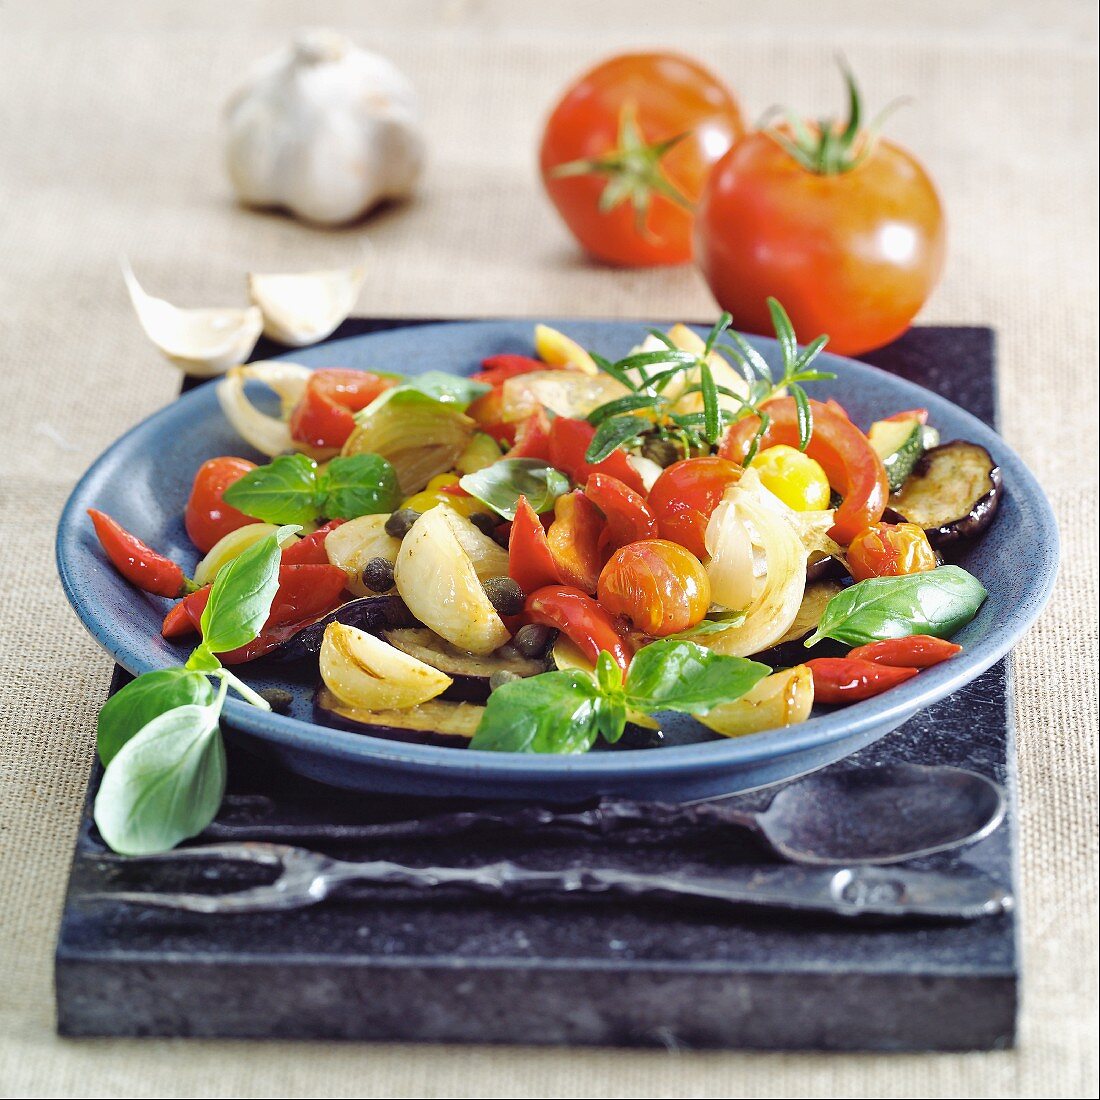 Aubergine and tomato salad with garlic